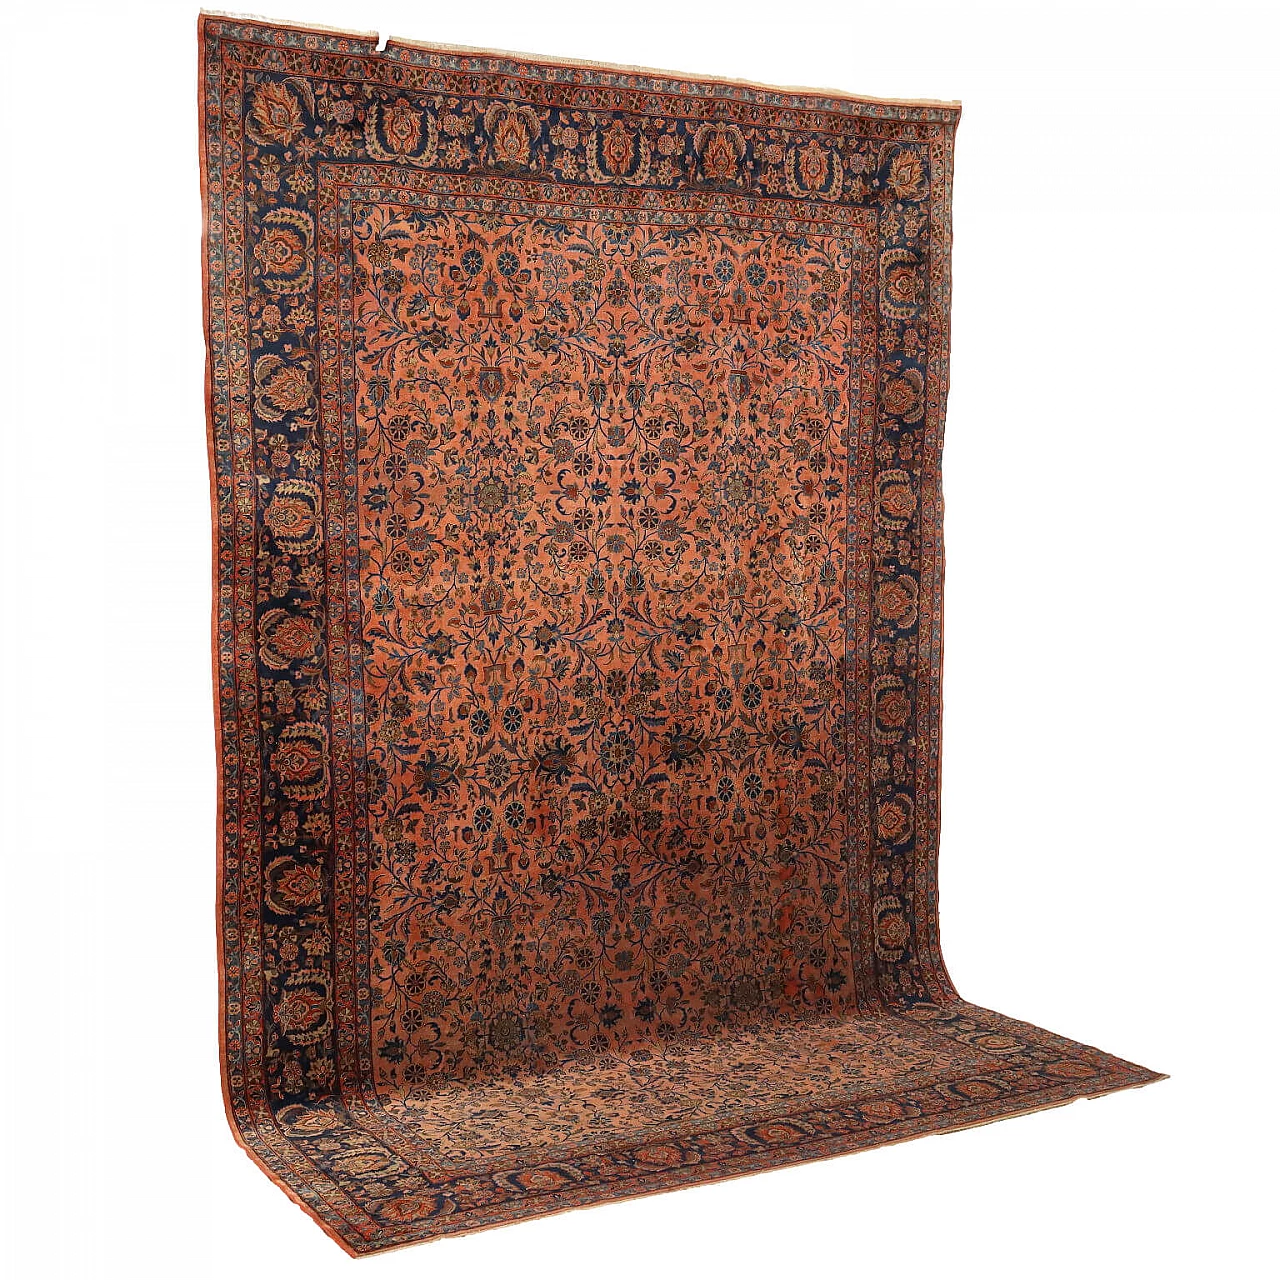 Iranian Keshan Manchester cotton and wool carpet 1